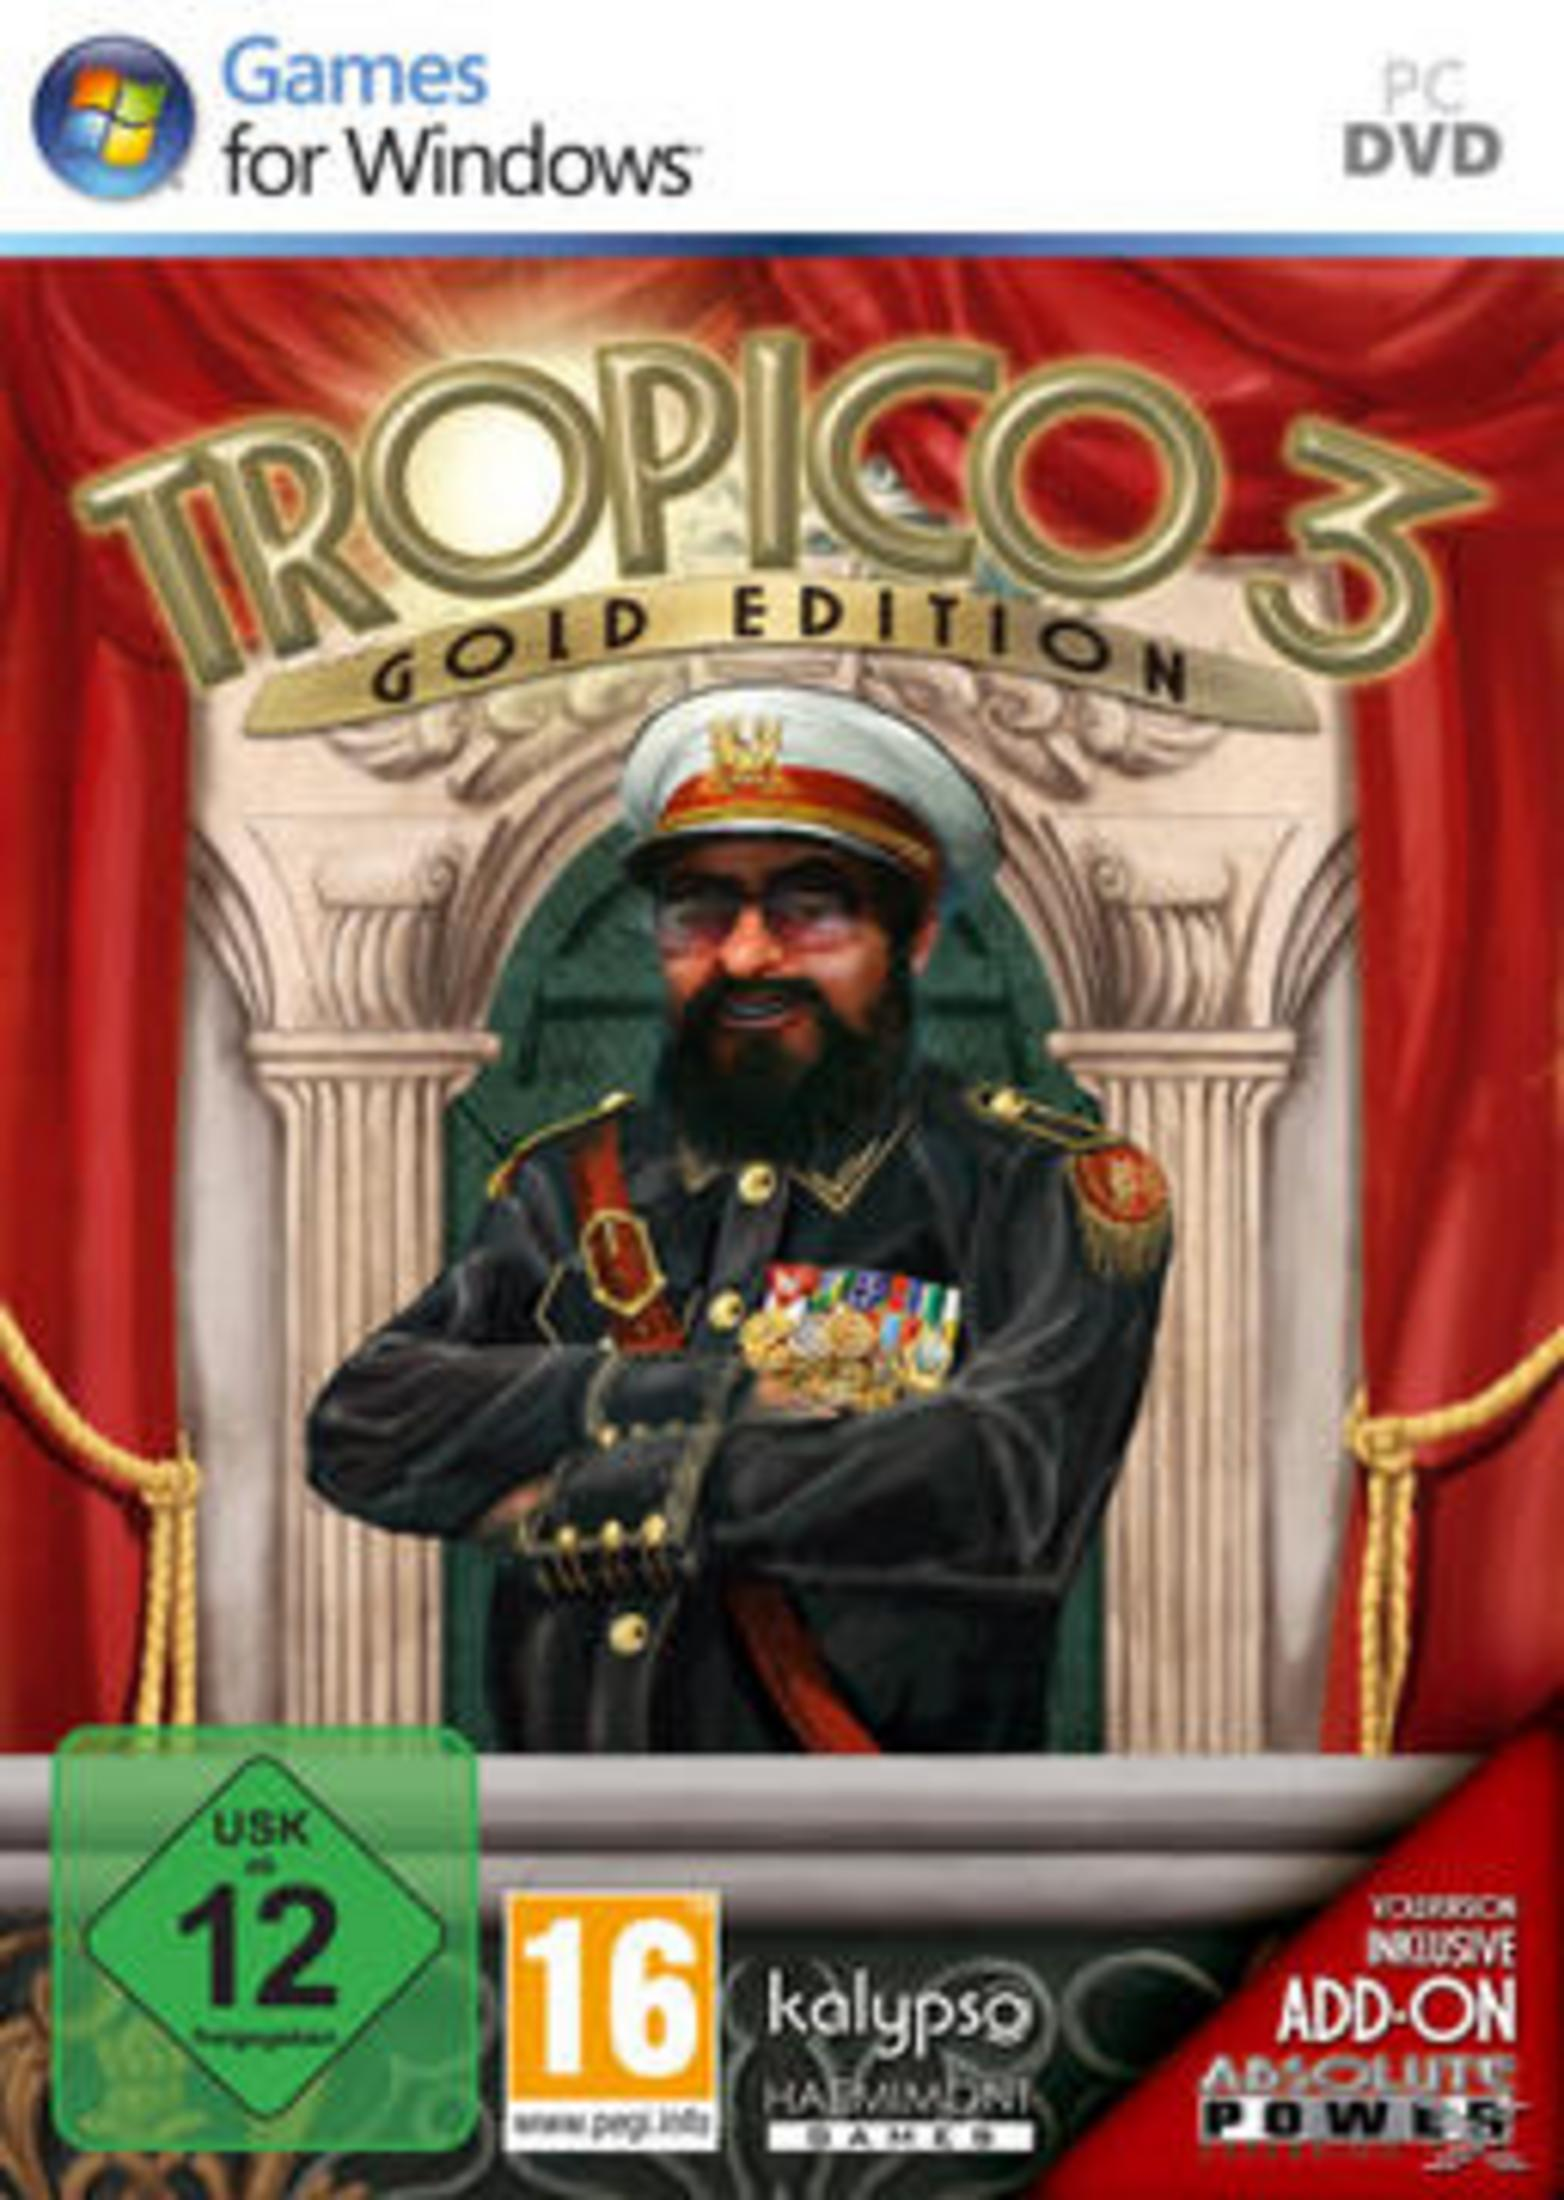 Tropico 3 Gold Edition [PC] 